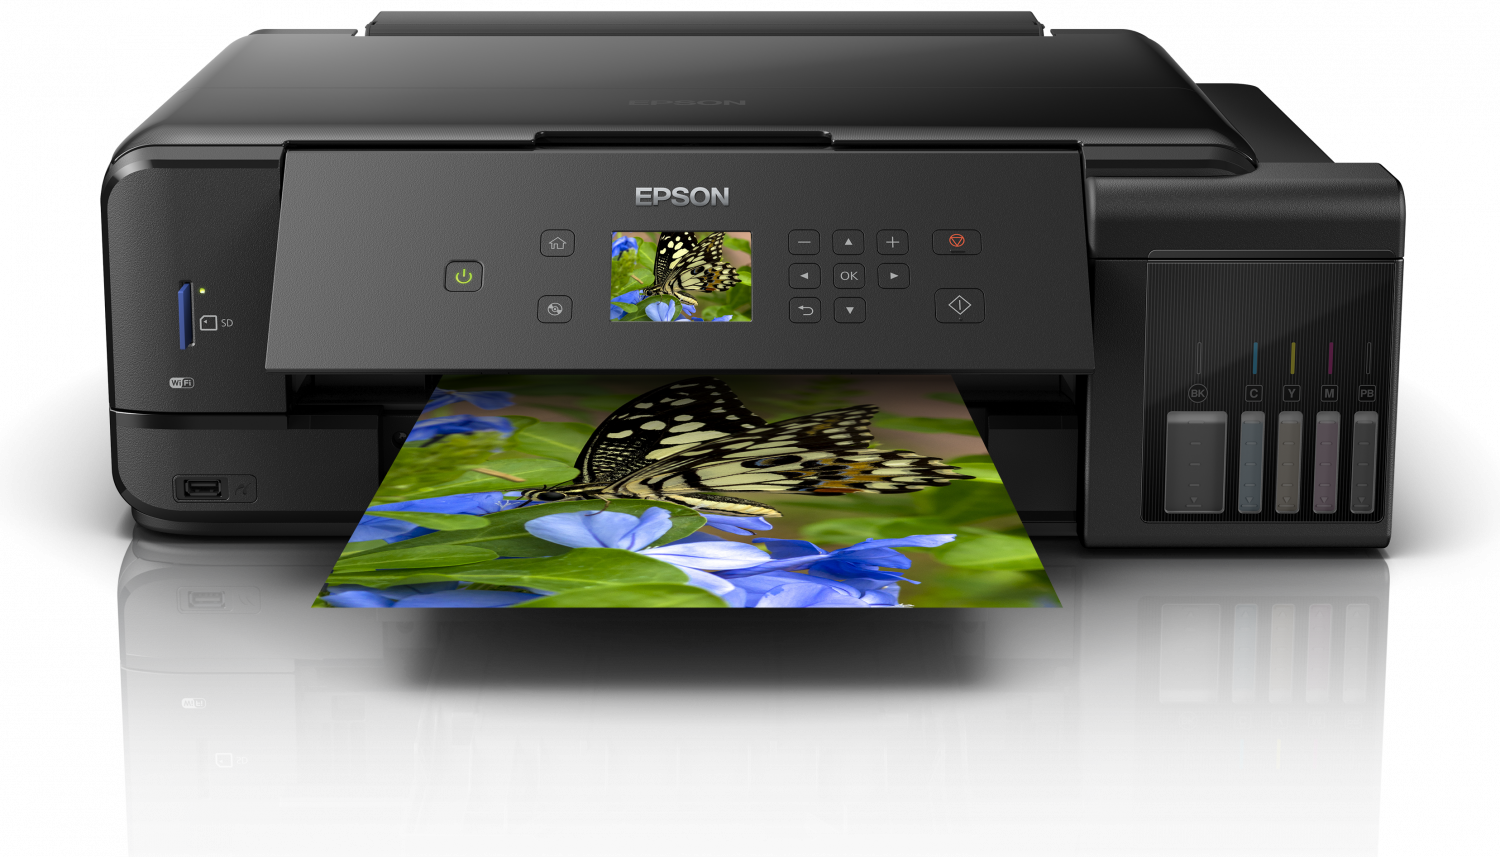 epson-ecotank-et-4760-wireless-all-in-one-printer-black-epson-ecotank